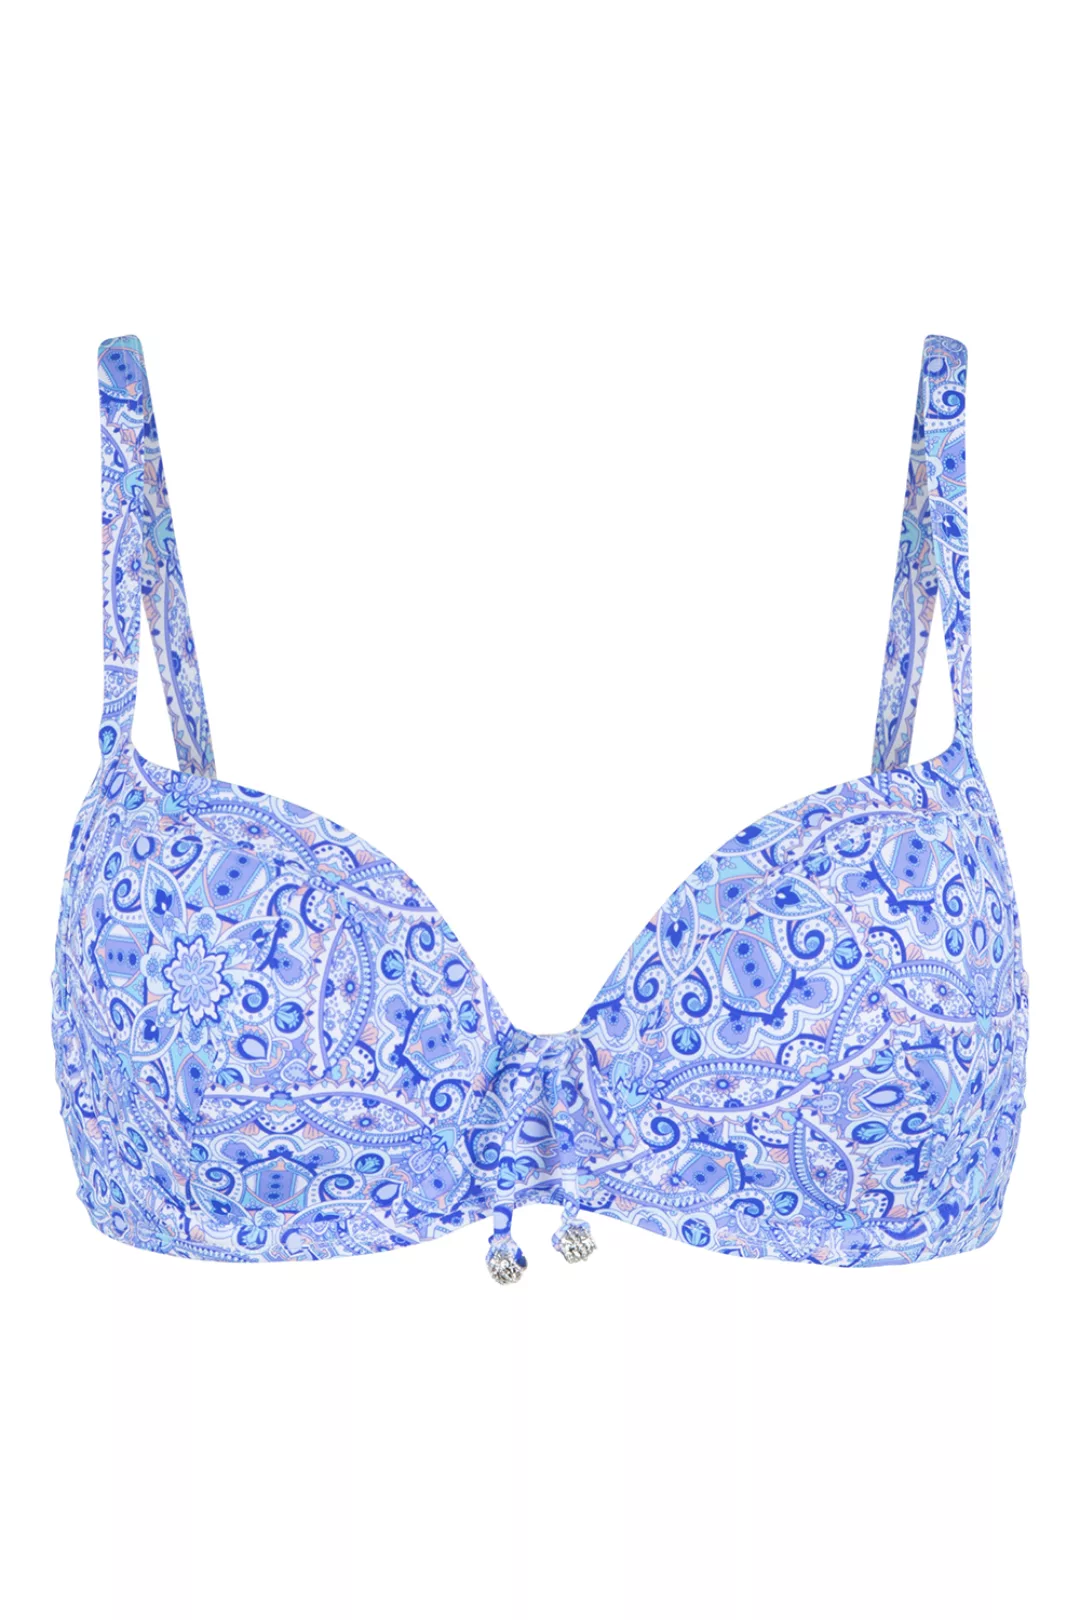 LingaDore Bikini Oberteil geformt Blue Paisley 38F blau günstig online kaufen